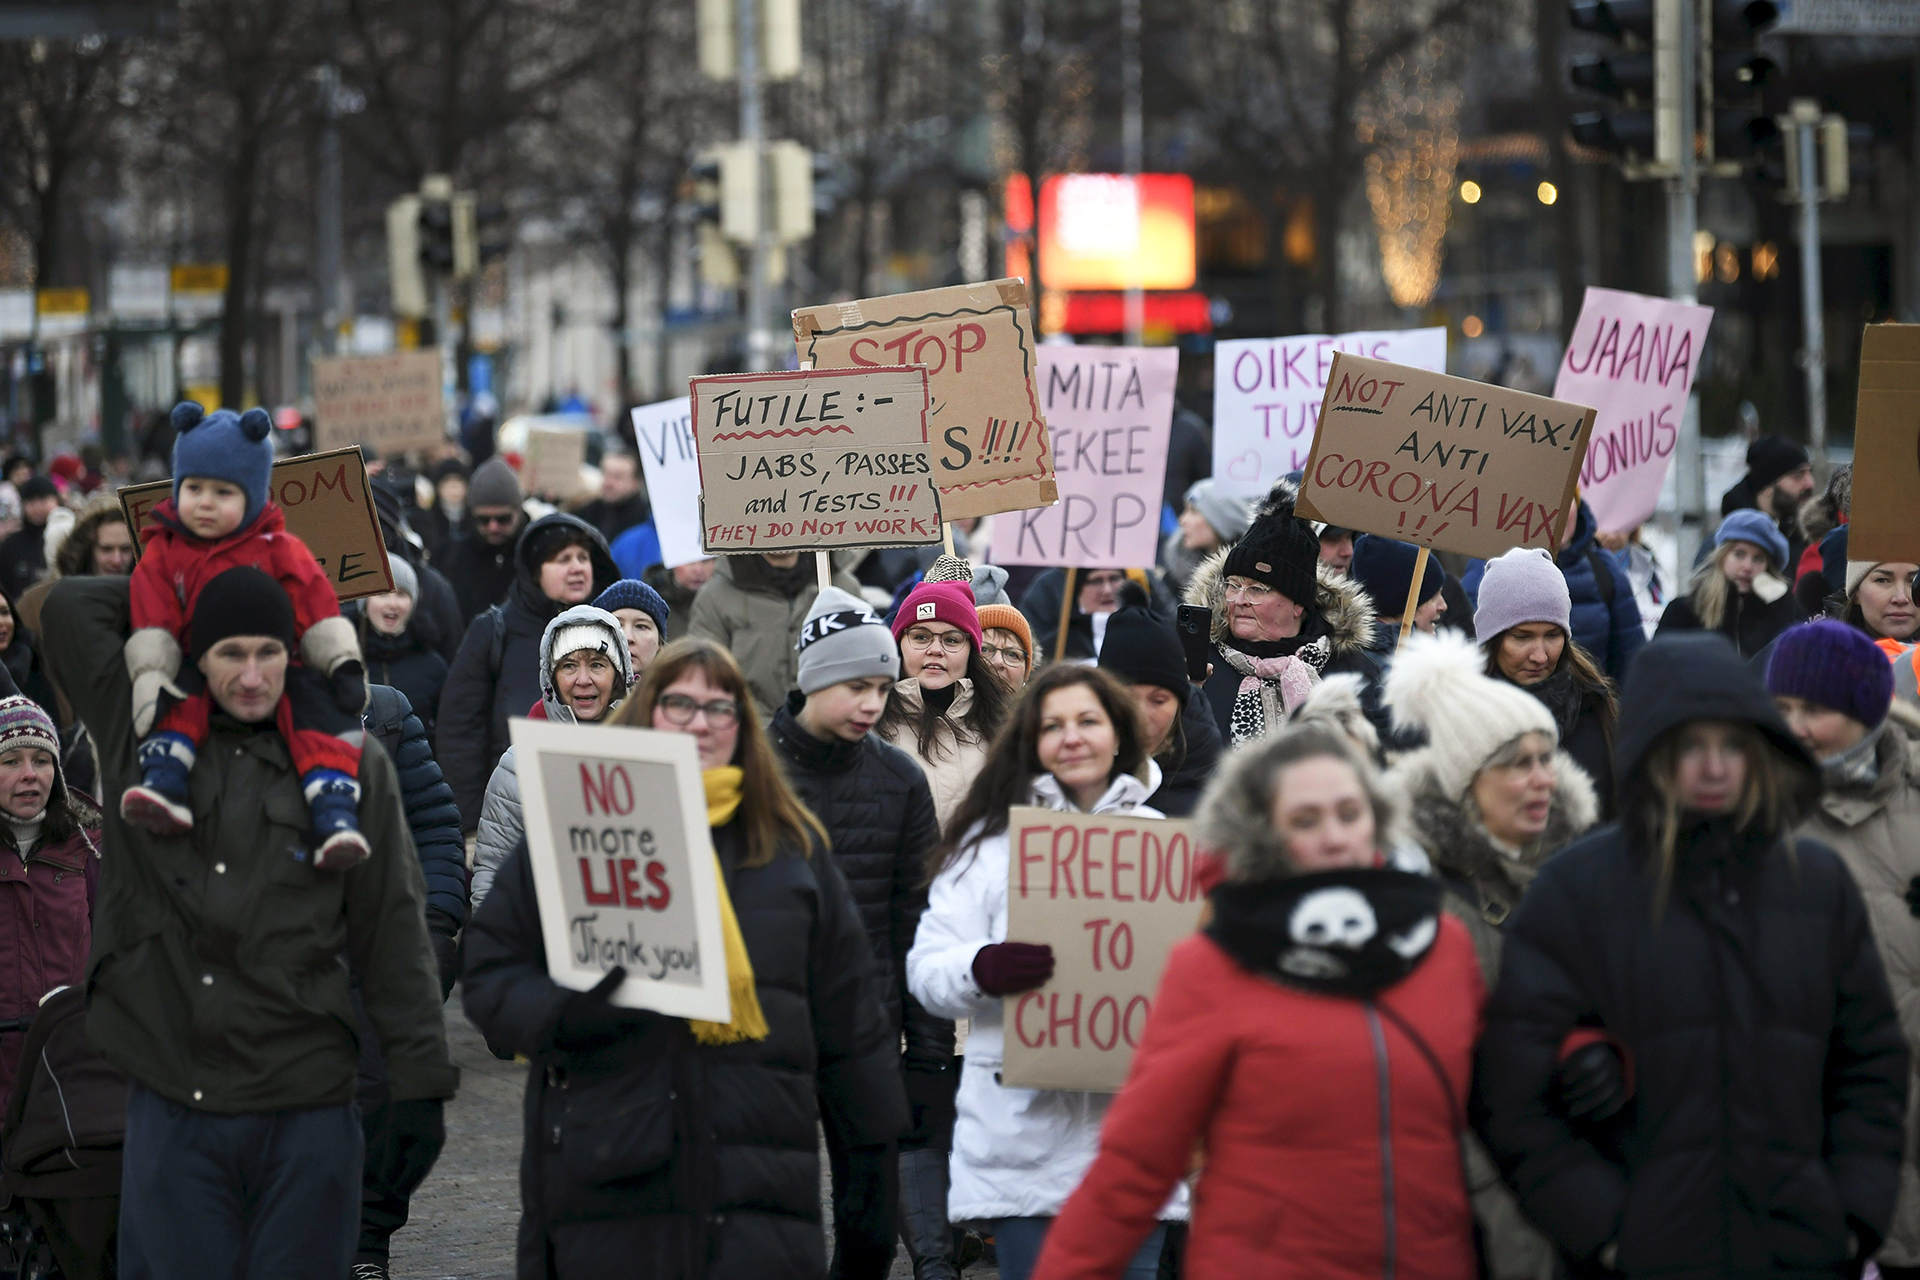 Thousands protest against Covid restrictions in Jyväskylä, Helsinki